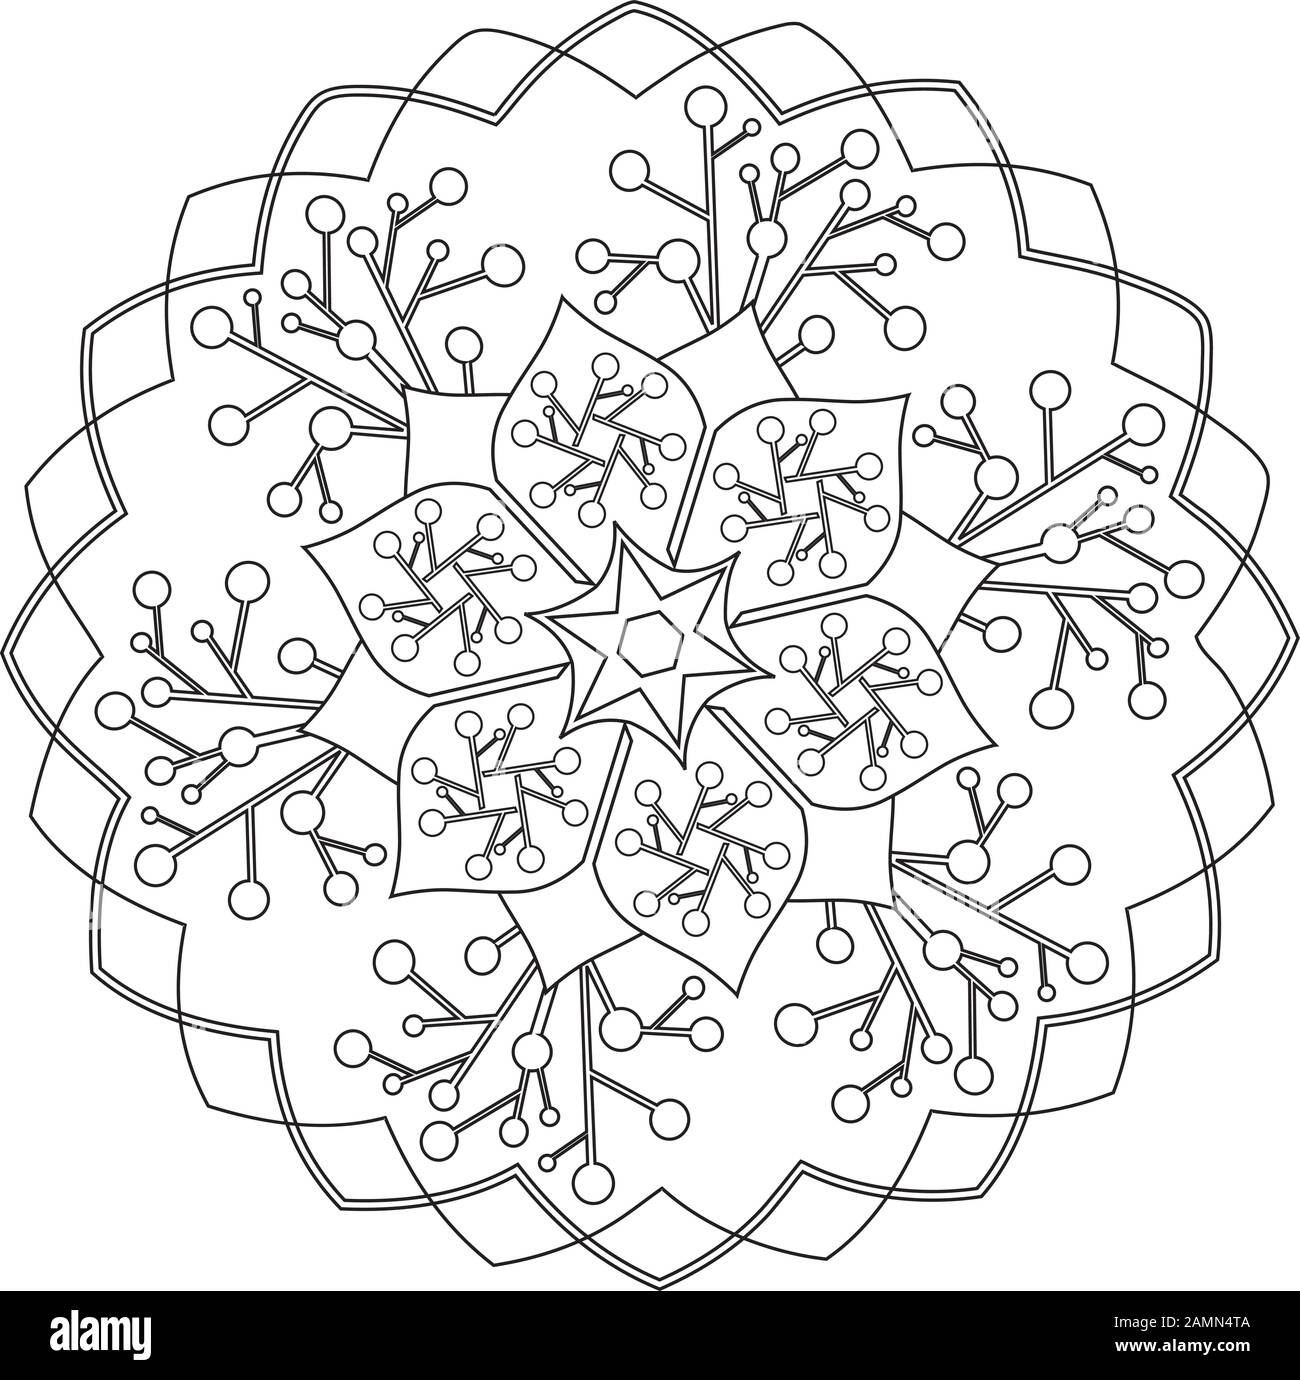 Mandala - Flower, Nature, Energy Circle Symbol in Black and White Stock Vector